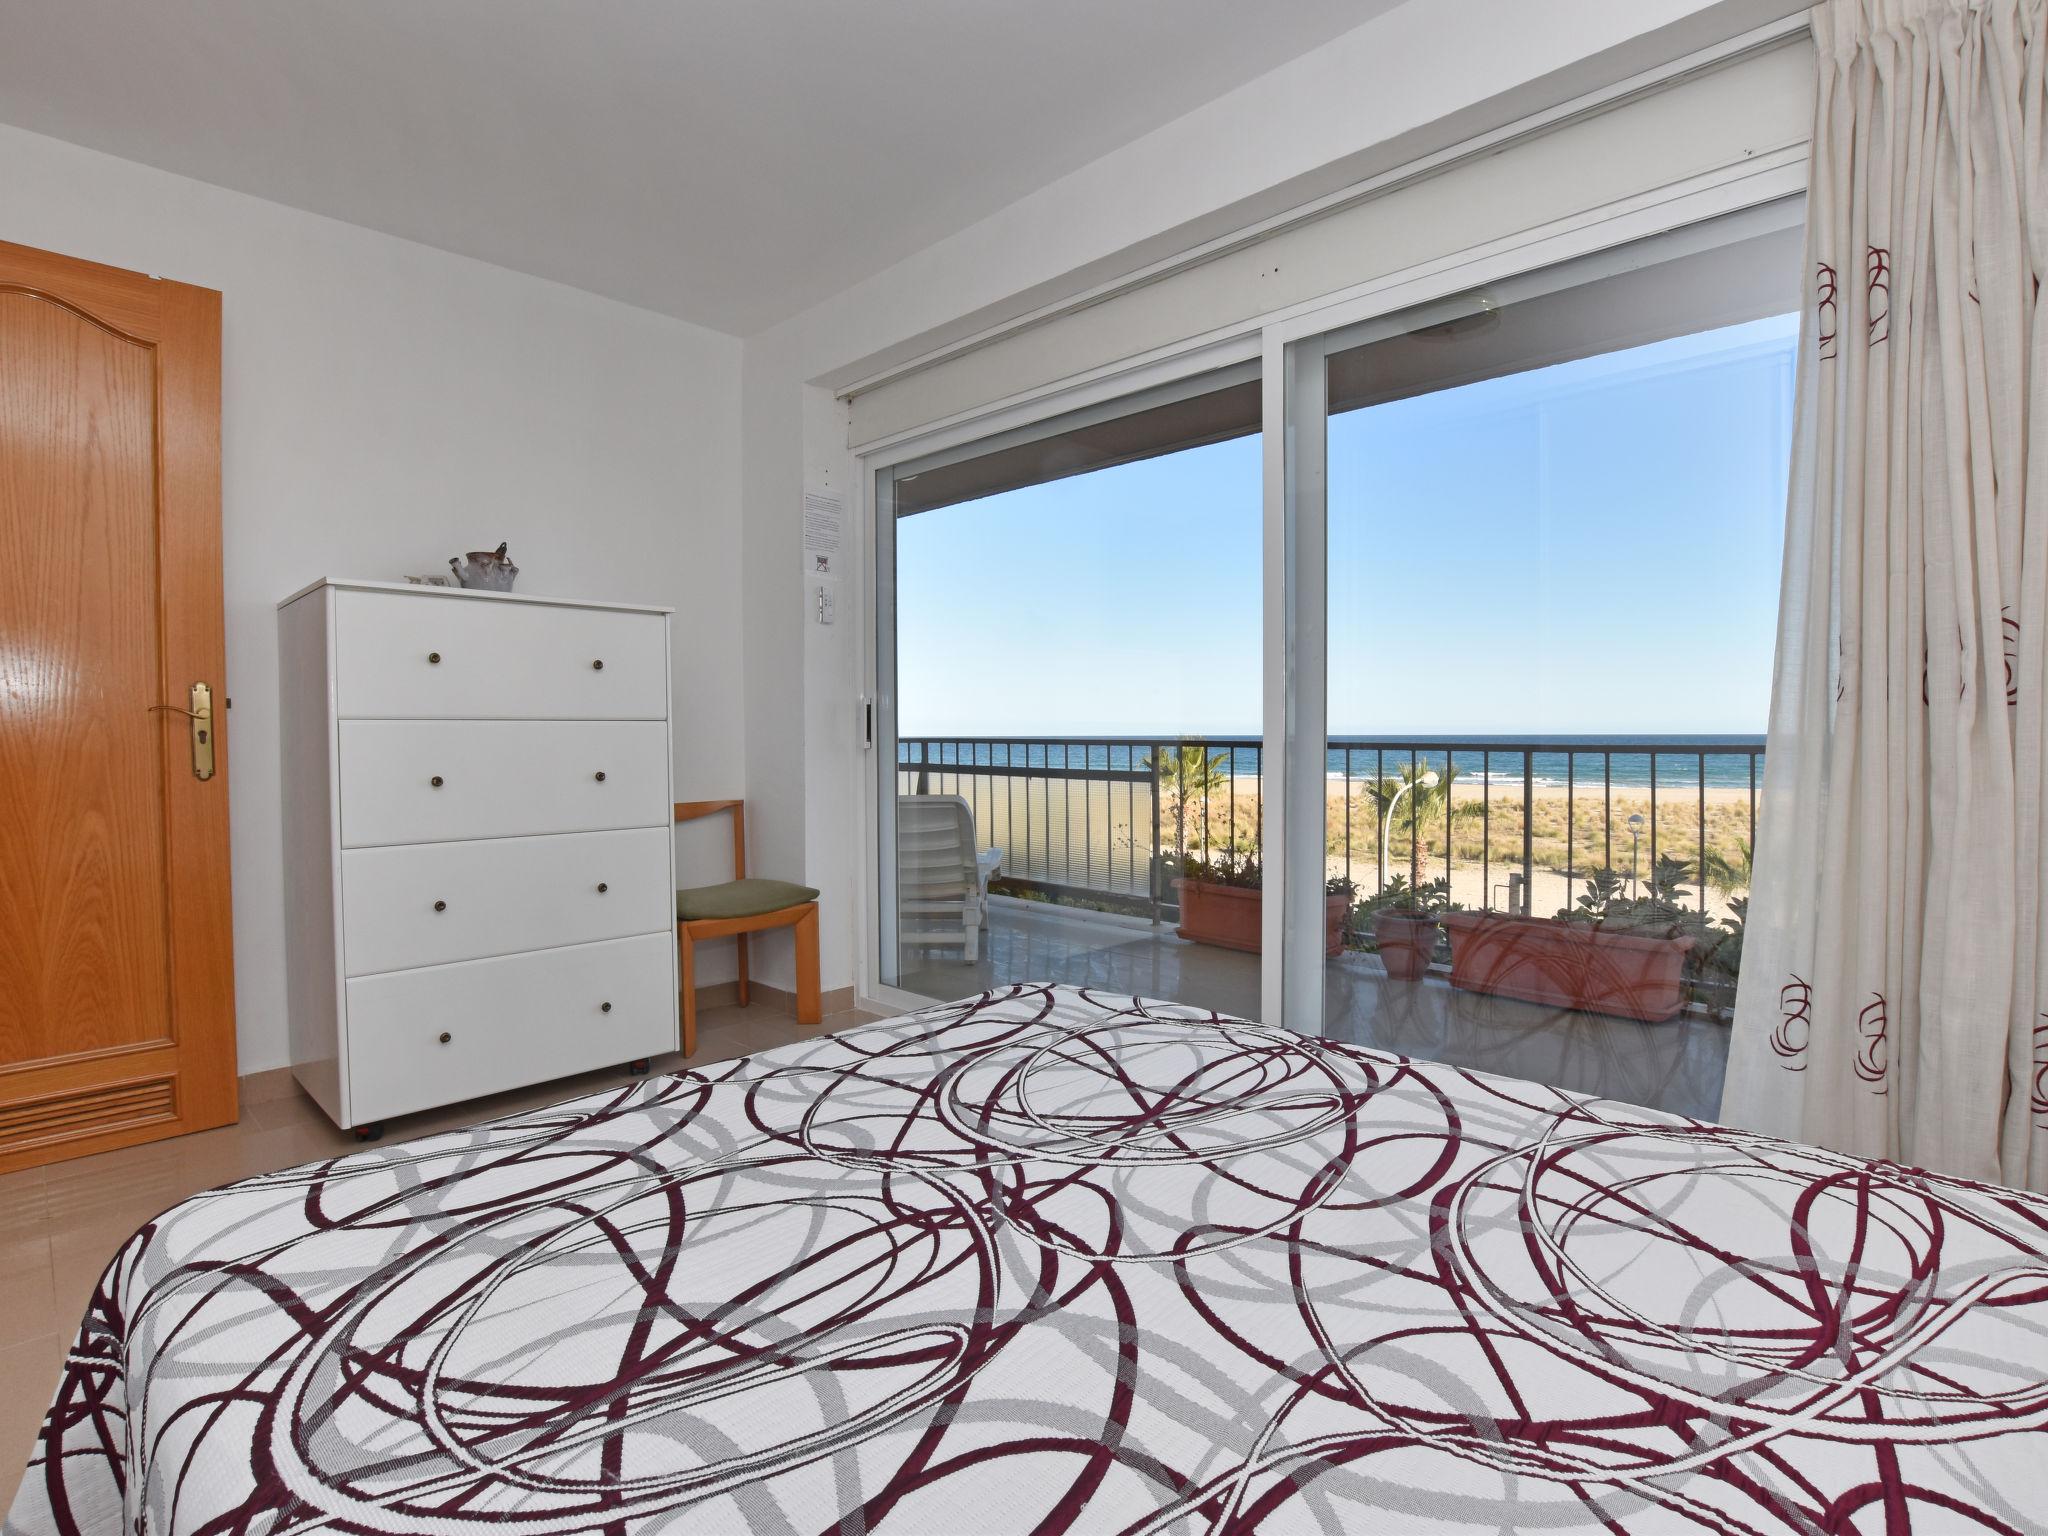 Photo 9 - Appartement de 4 chambres à Torredembarra avec terrasse et vues à la mer